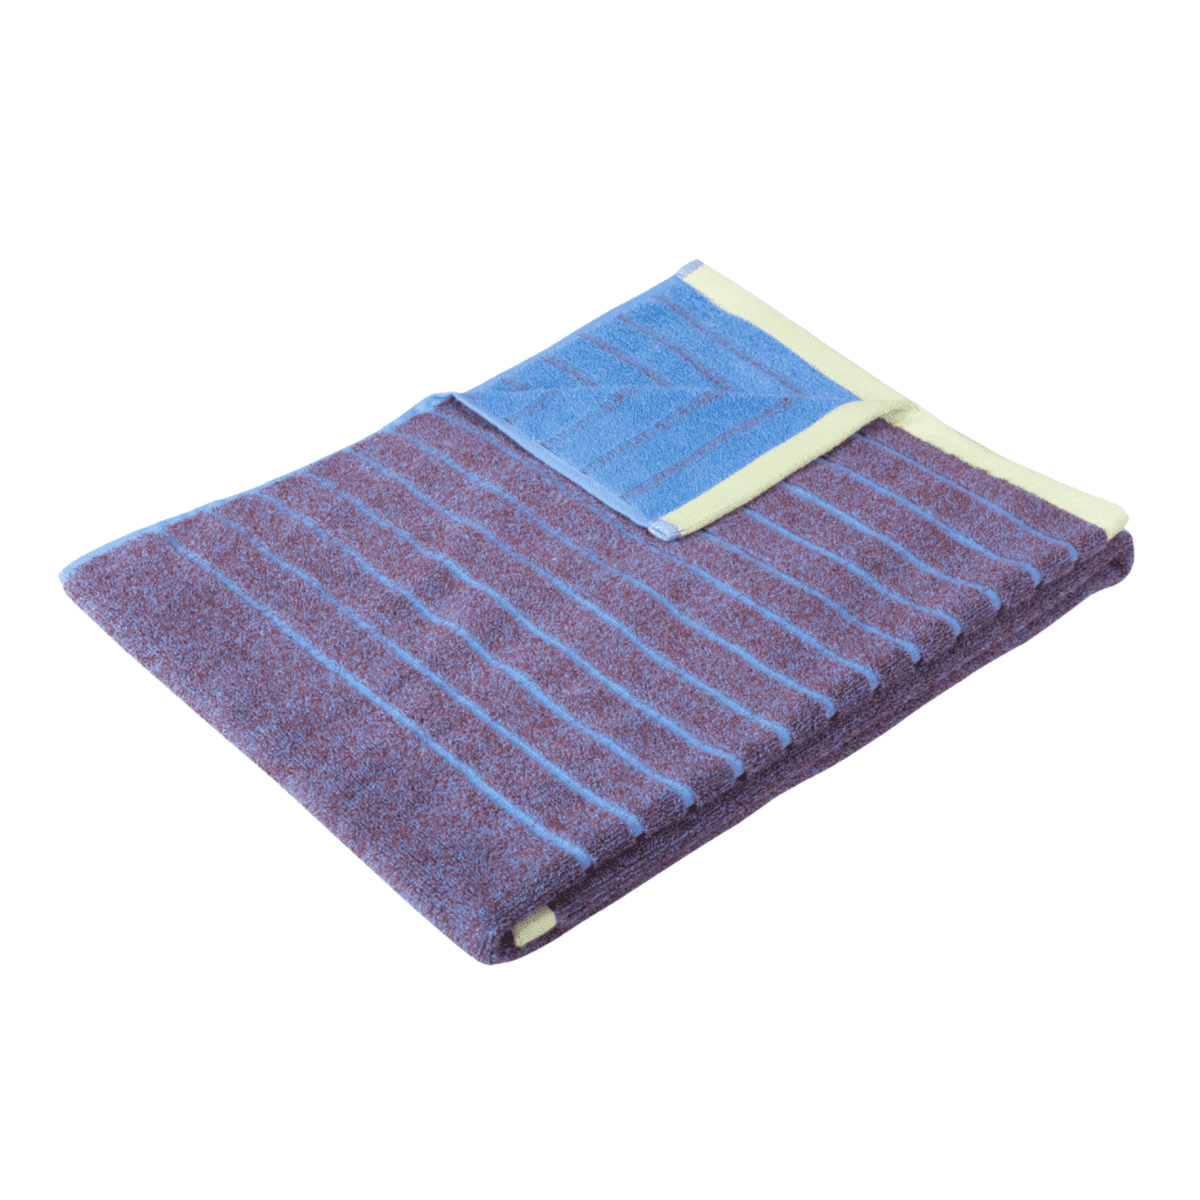 Billede af Hübsch Promenade towel small - 50x100cm - purple/blue